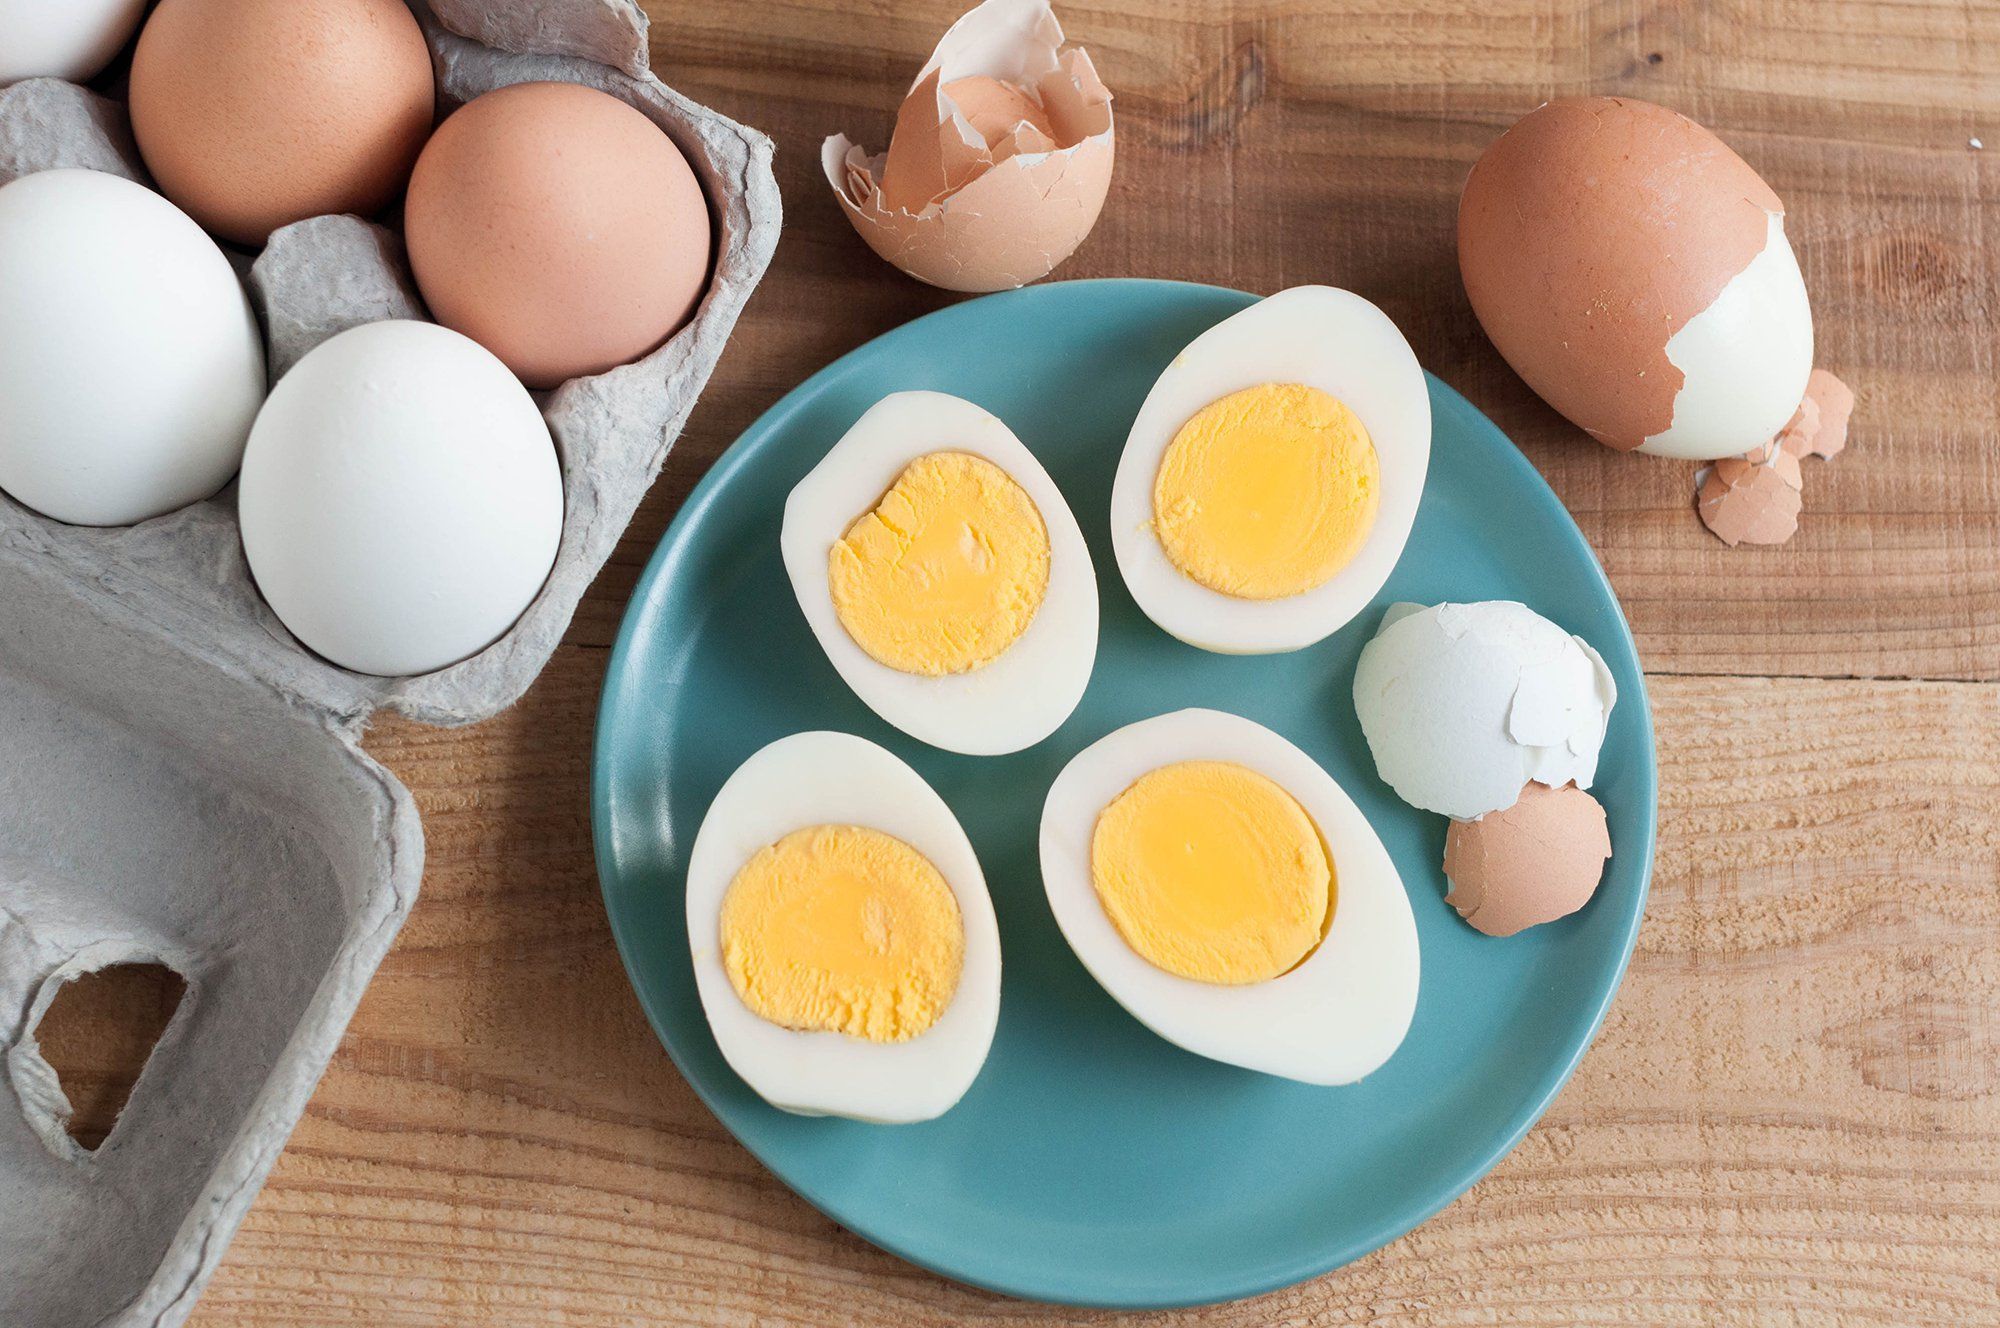 8 Cara Merebus Telur Ayam, Asin, dan Puyuh Setengah Matang Agar Tidak